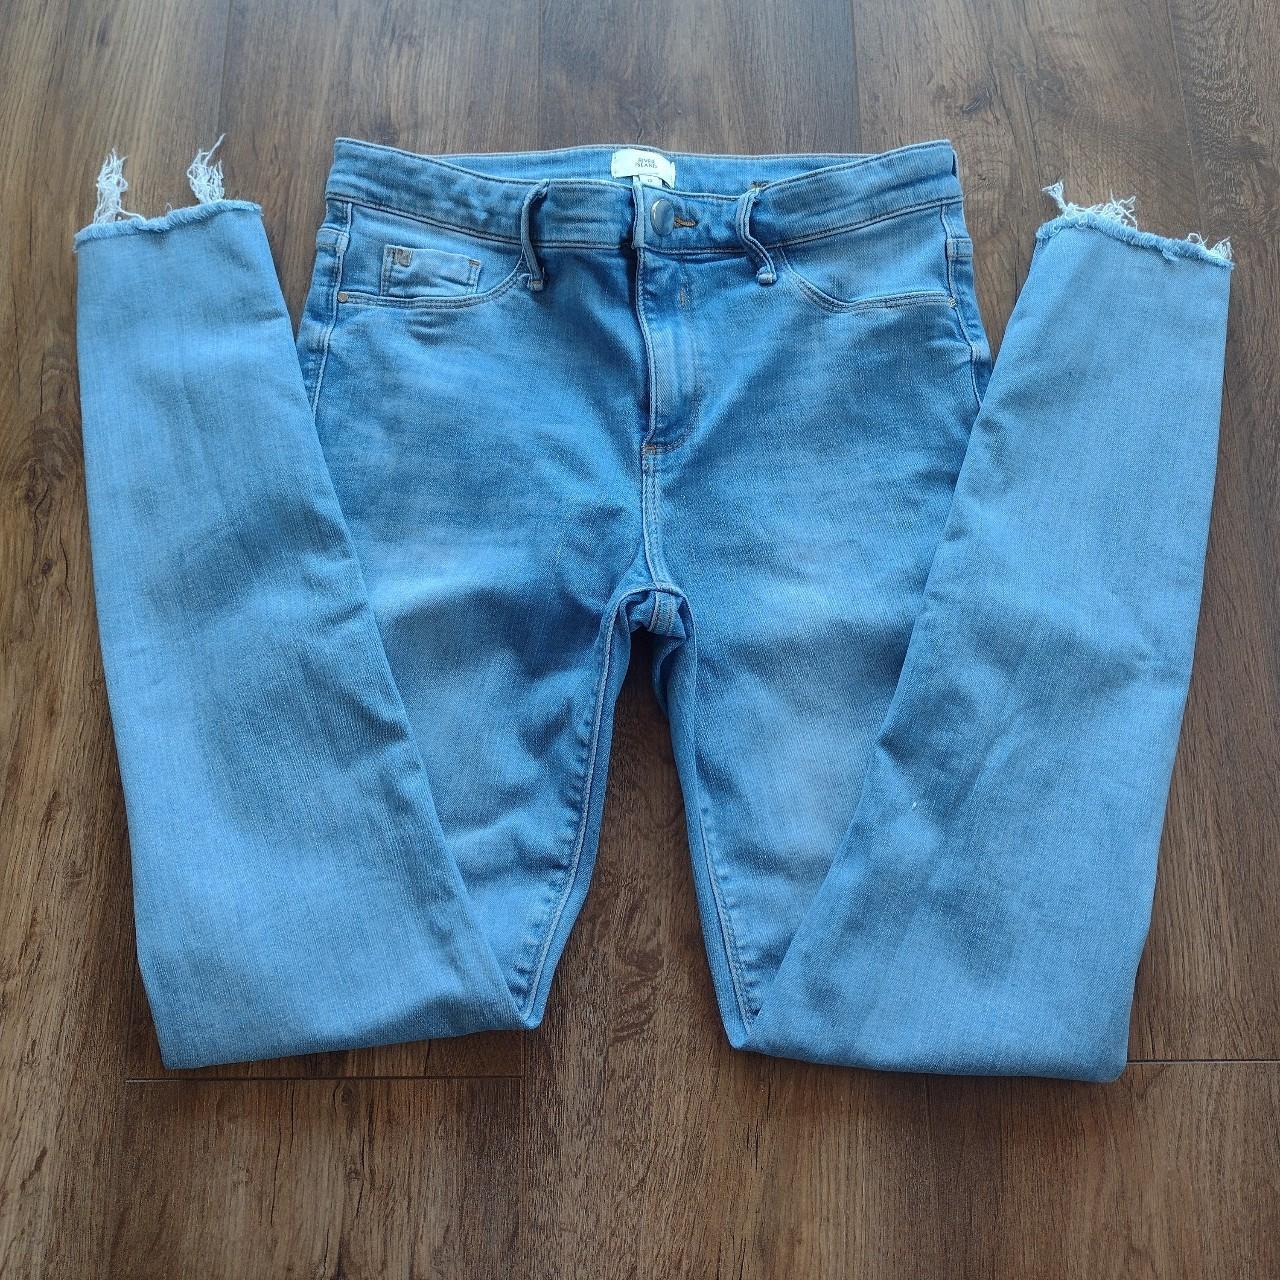 River Island 'Molly' jeans Size 12L - Depop